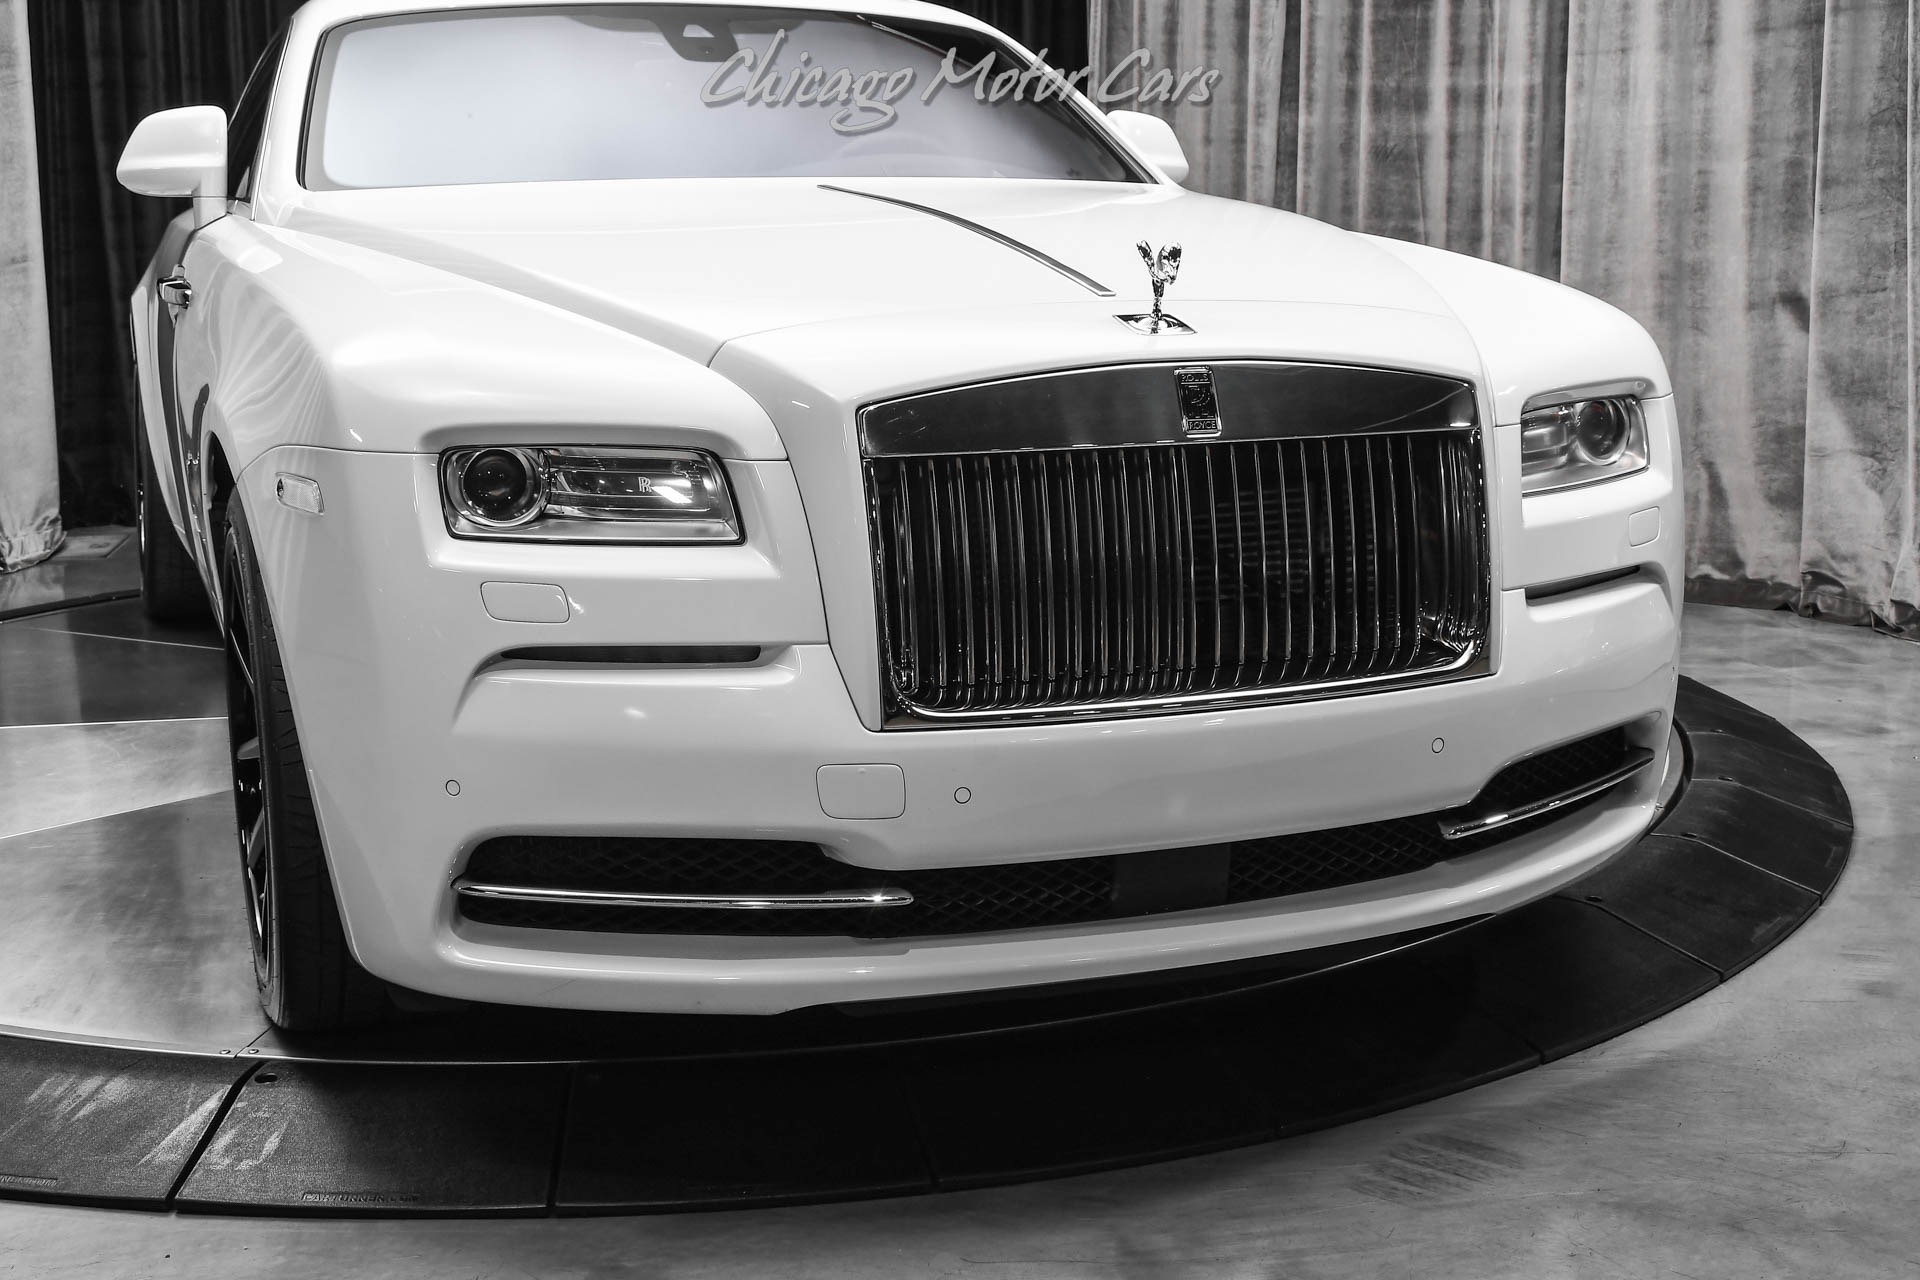 White on White Bespoke Rolls Royce Wraith  Rolls royce wraith Rolls royce  White rolls royce